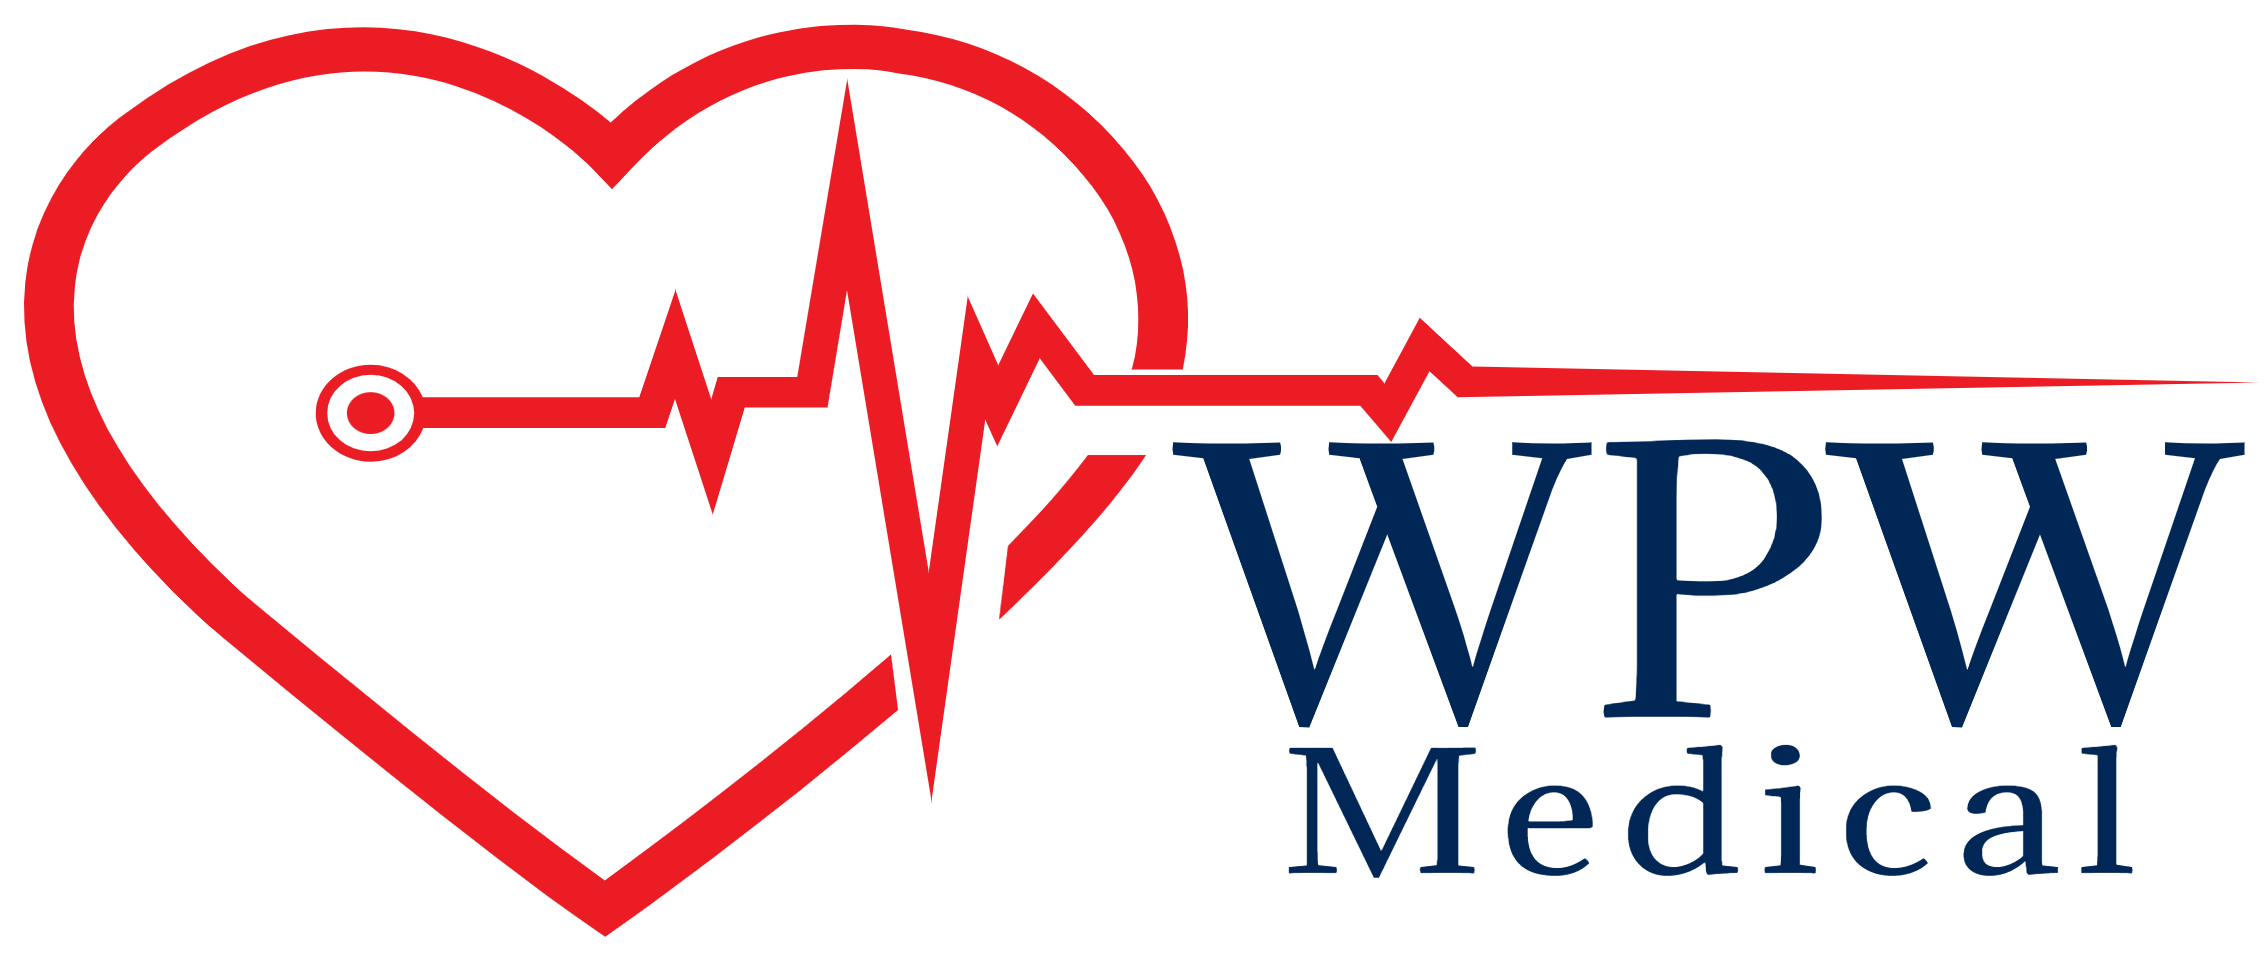 WPW Medical